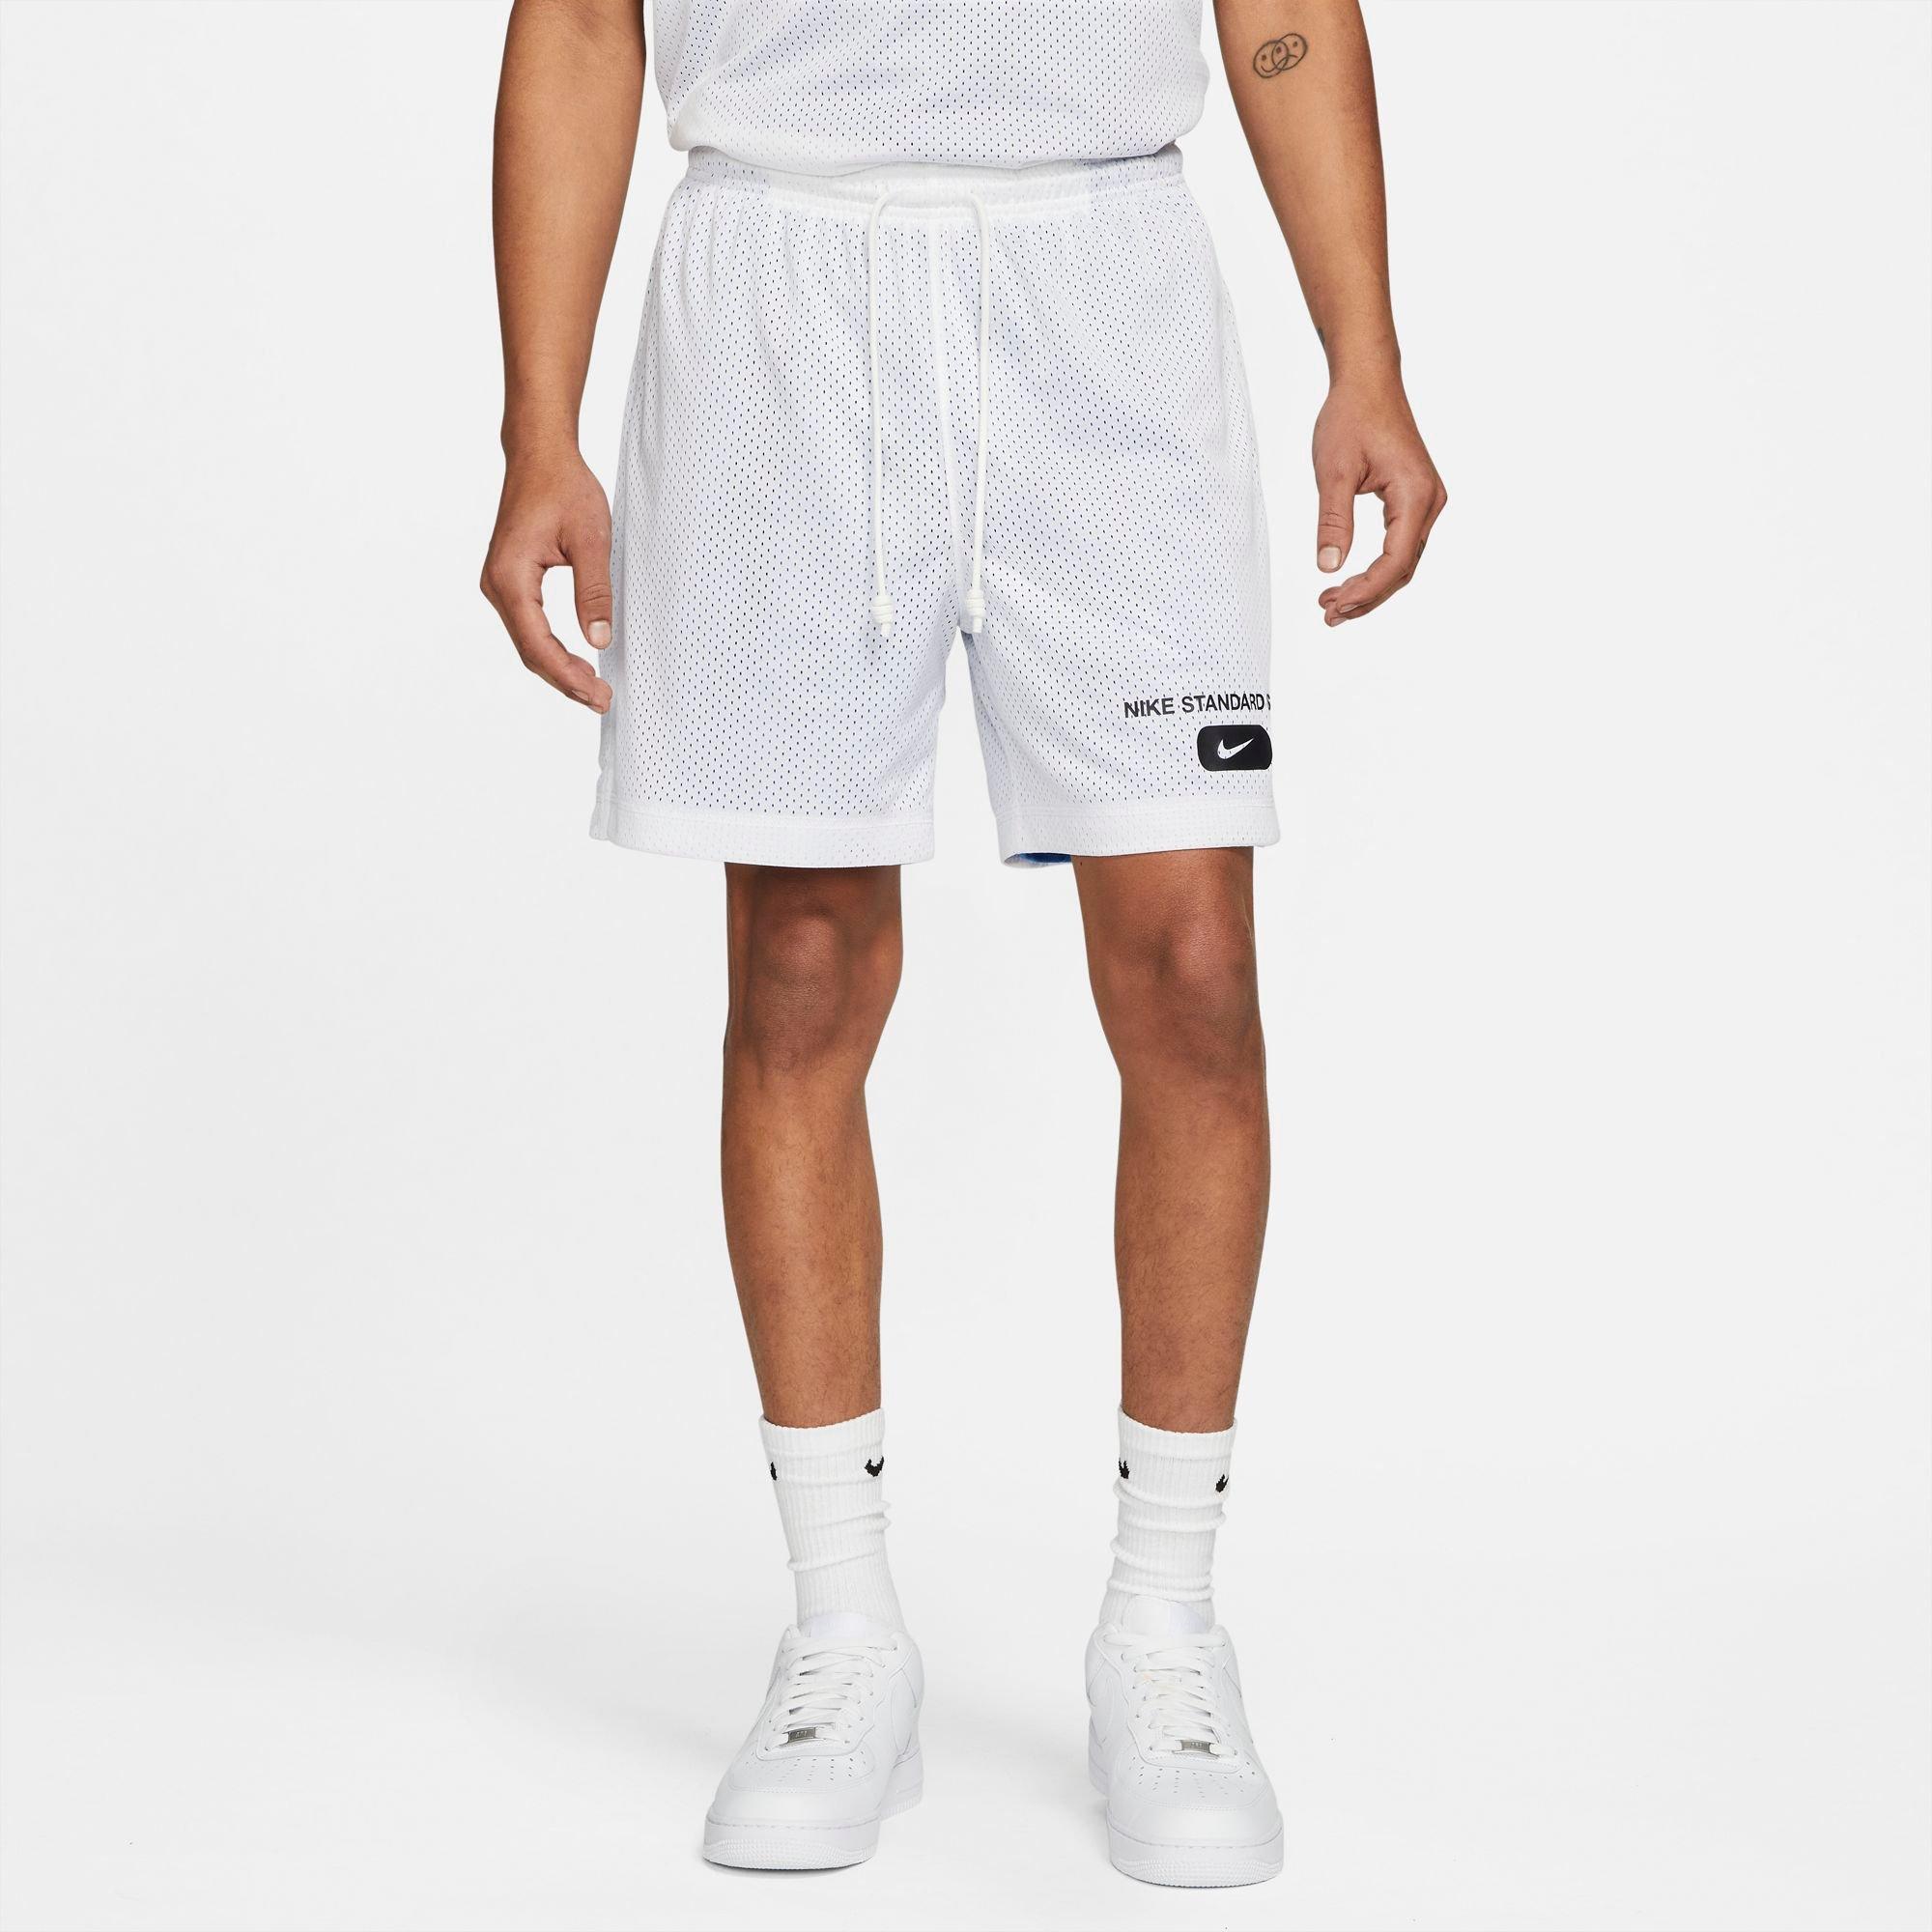 Basketball Performance Shorts Bottom Jersey Mens James Lakers Shorts Double Summer Sports Shorts Fashion Casual Loose Basketball Shorts